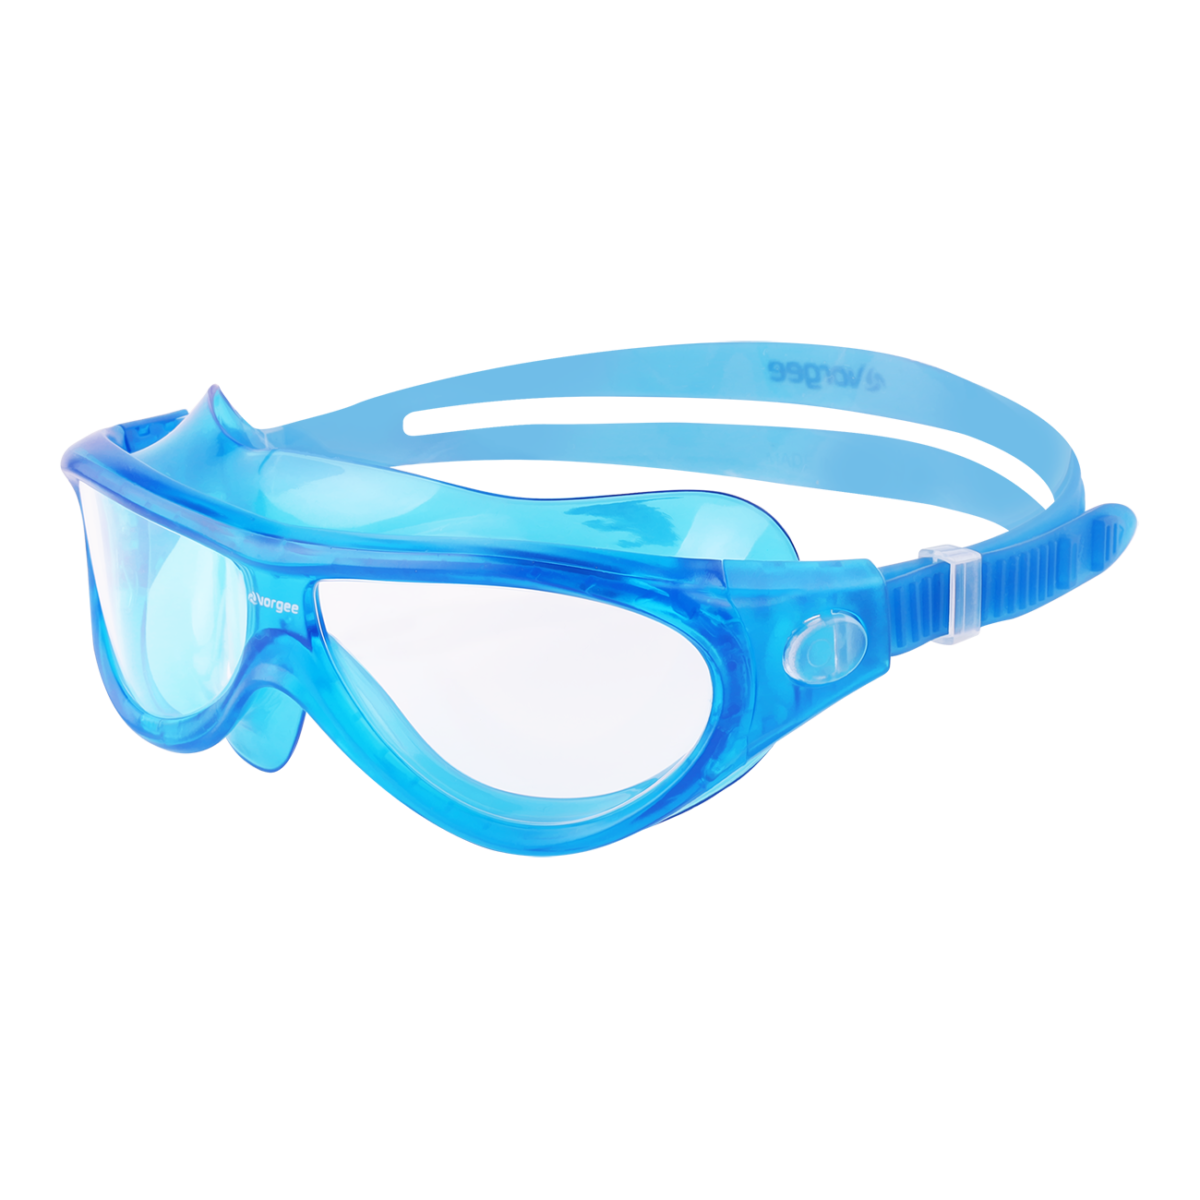 Vorgee Junior Starfish Mask Goggles